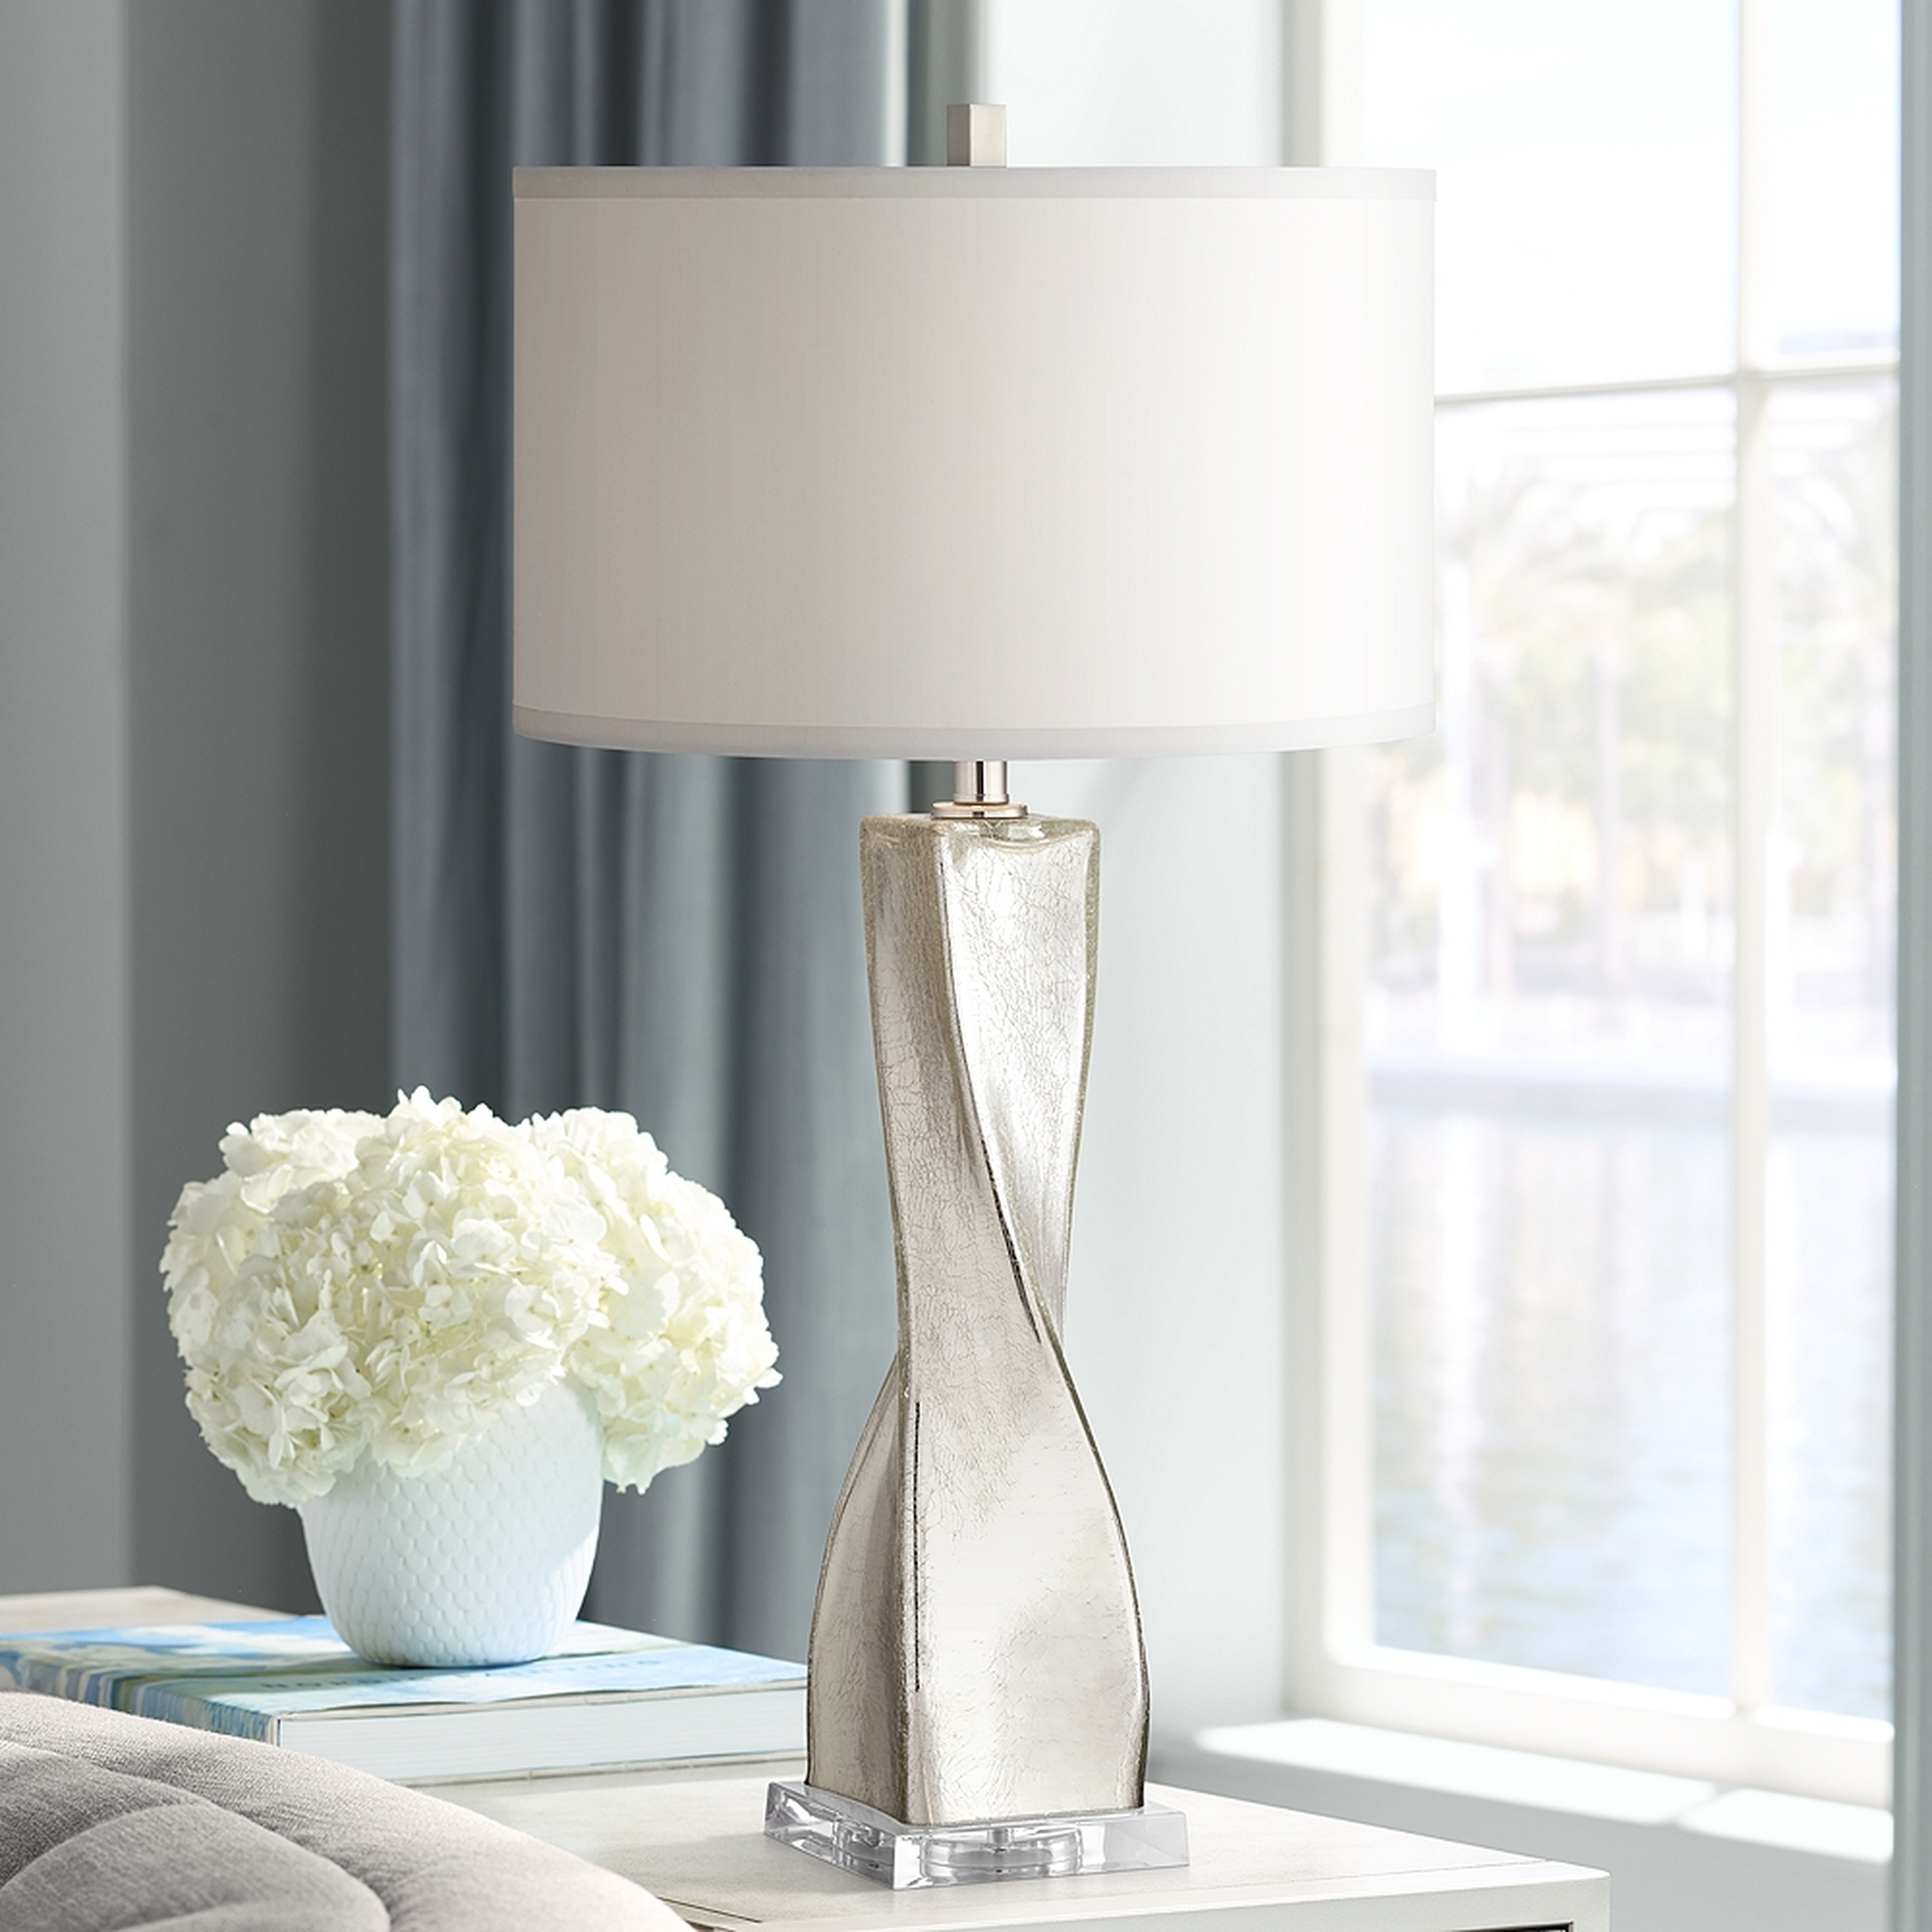 Oirin Silver Twist Crackle Mercury Glass Table Lamp - Style # 68R18 - Lamps Plus